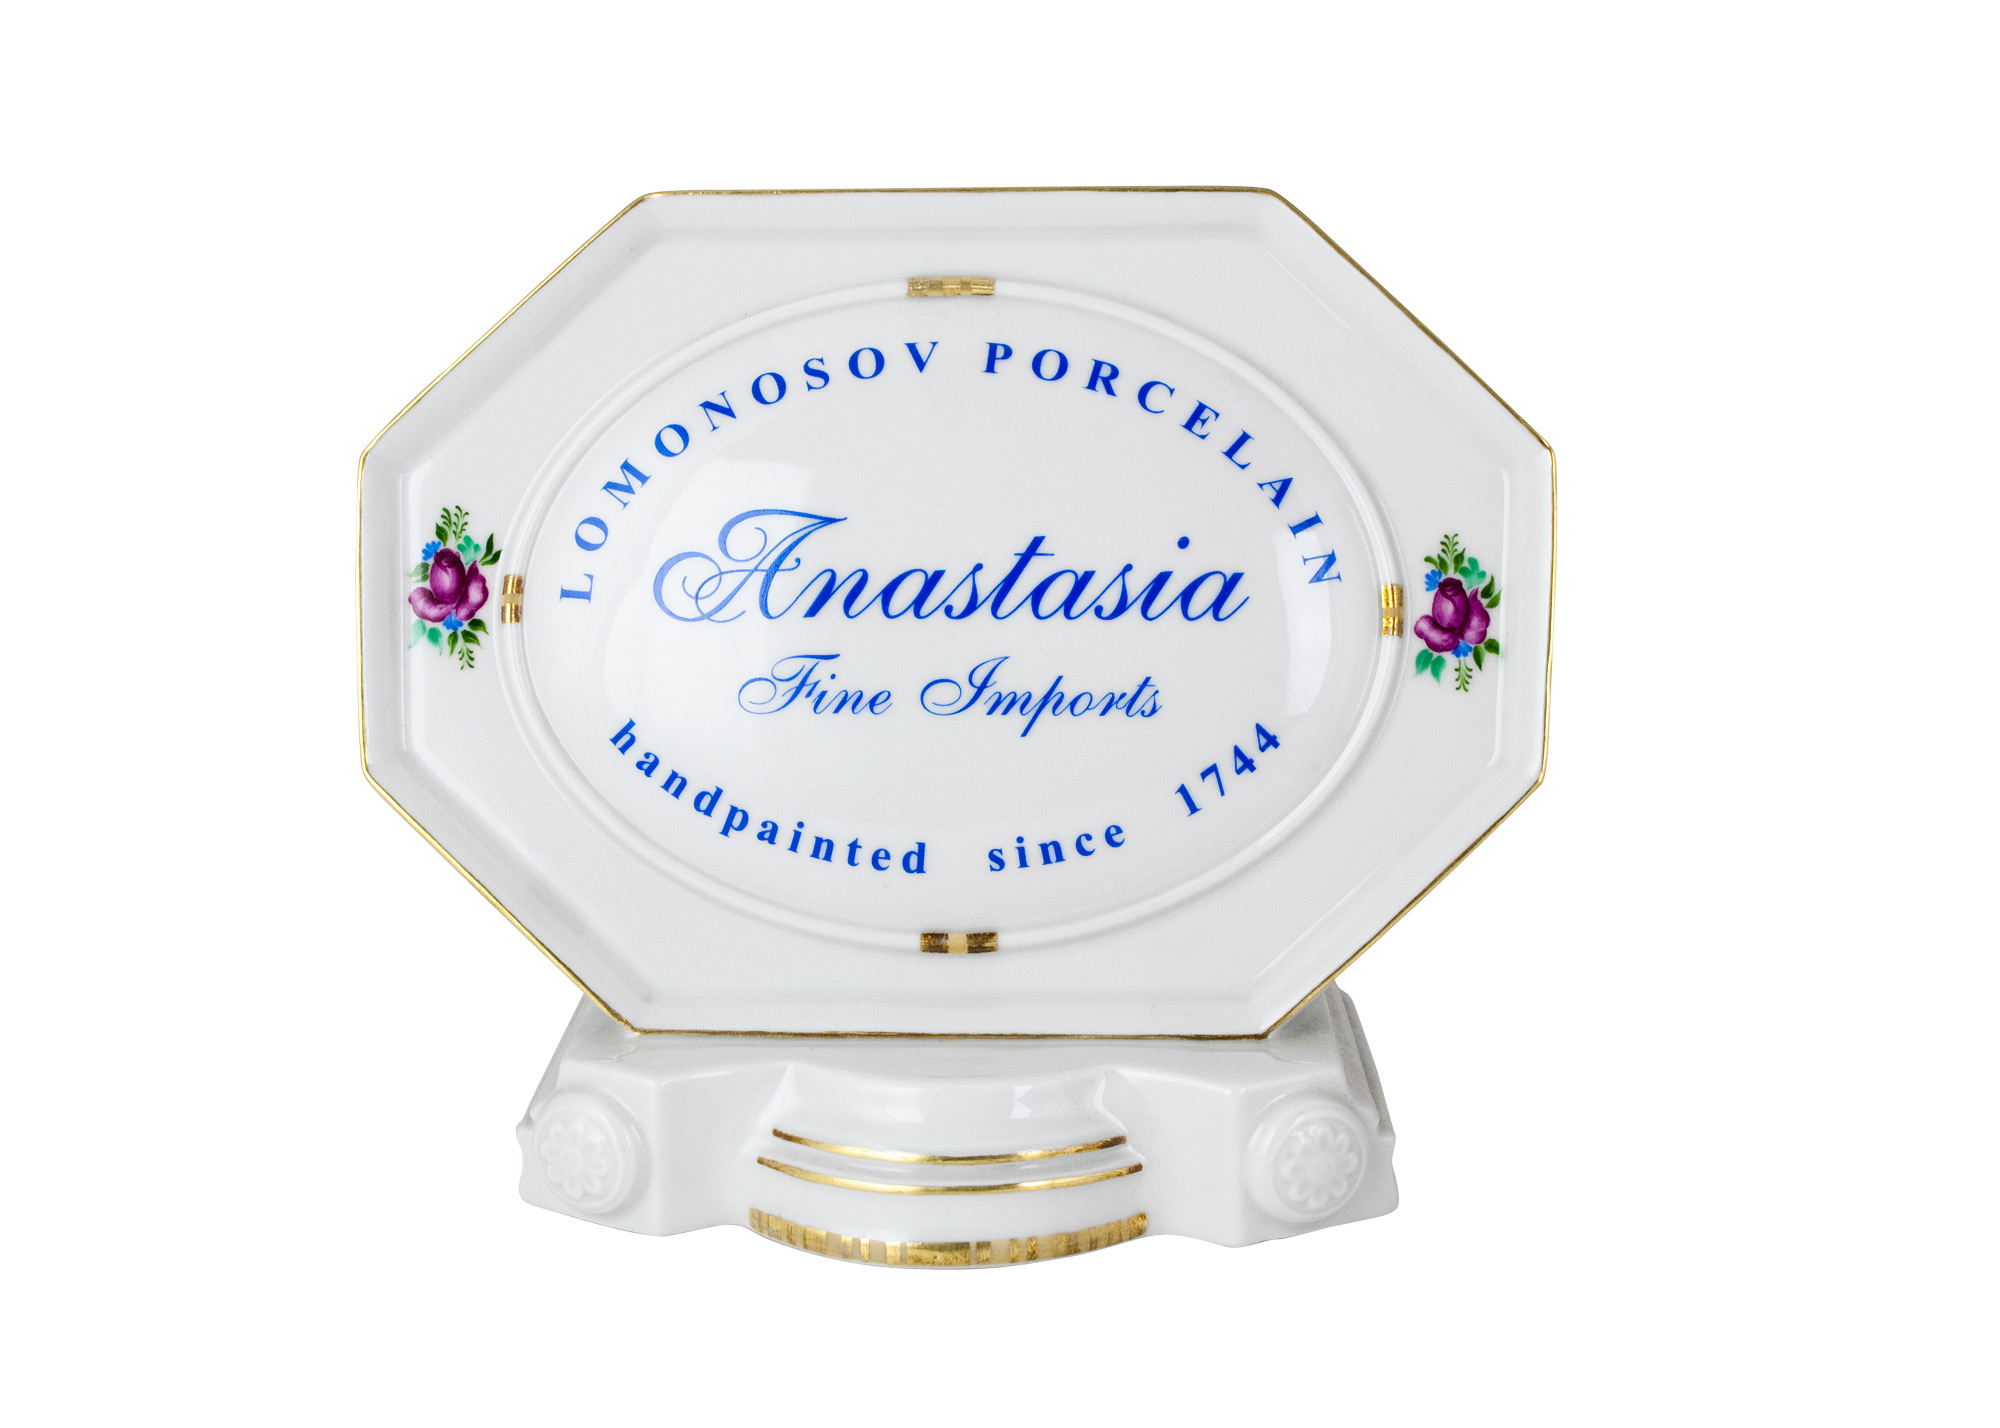 Lomonosov Porcelain Factory Sign